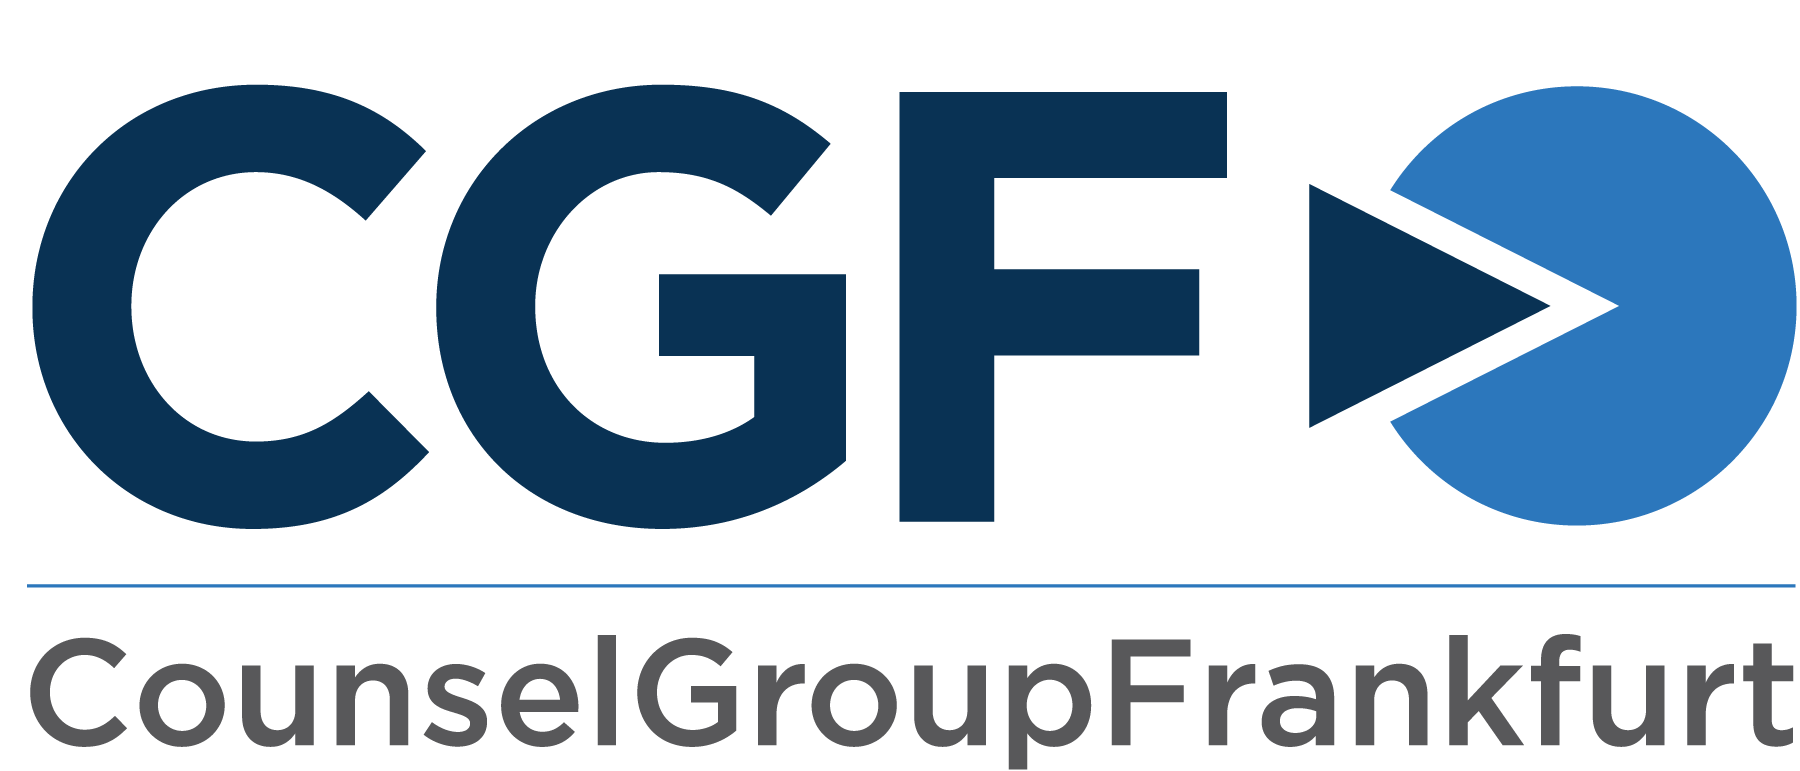 cgf logo